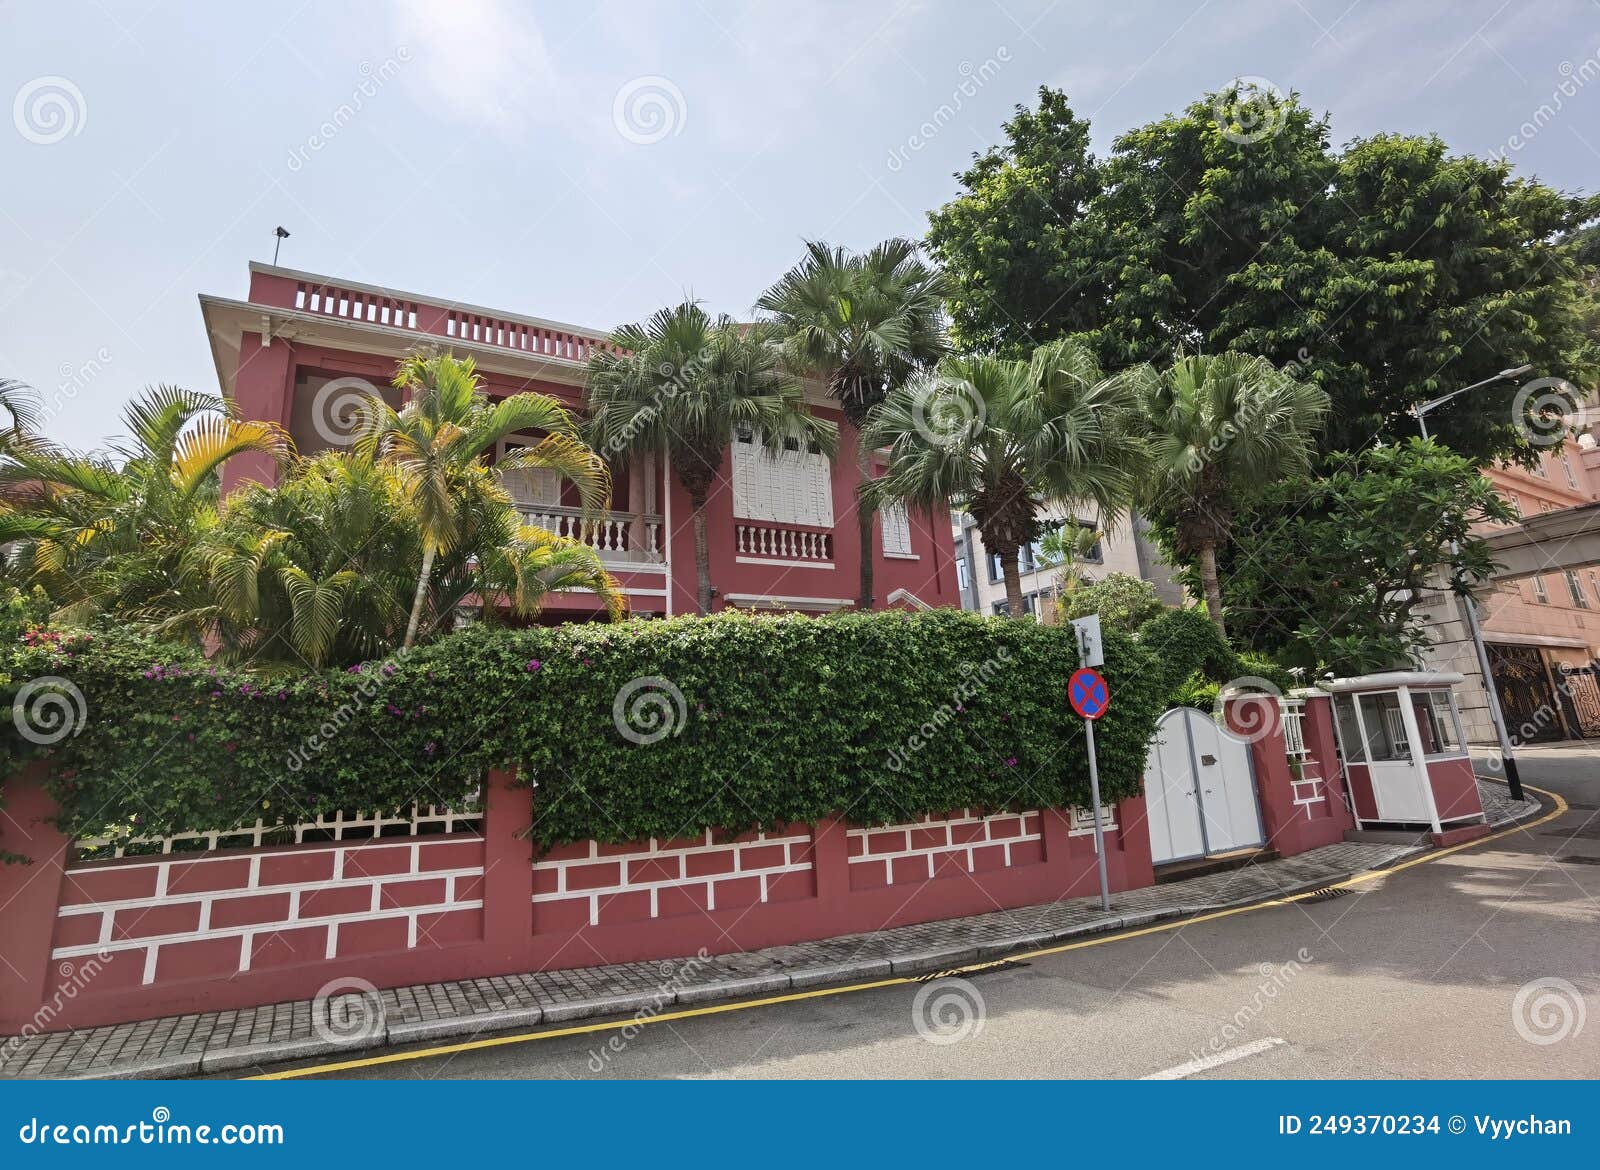 antique portuguese modernism architecture colonial macau heritage building sai van mansion colina da penha hill luxury lifestyle